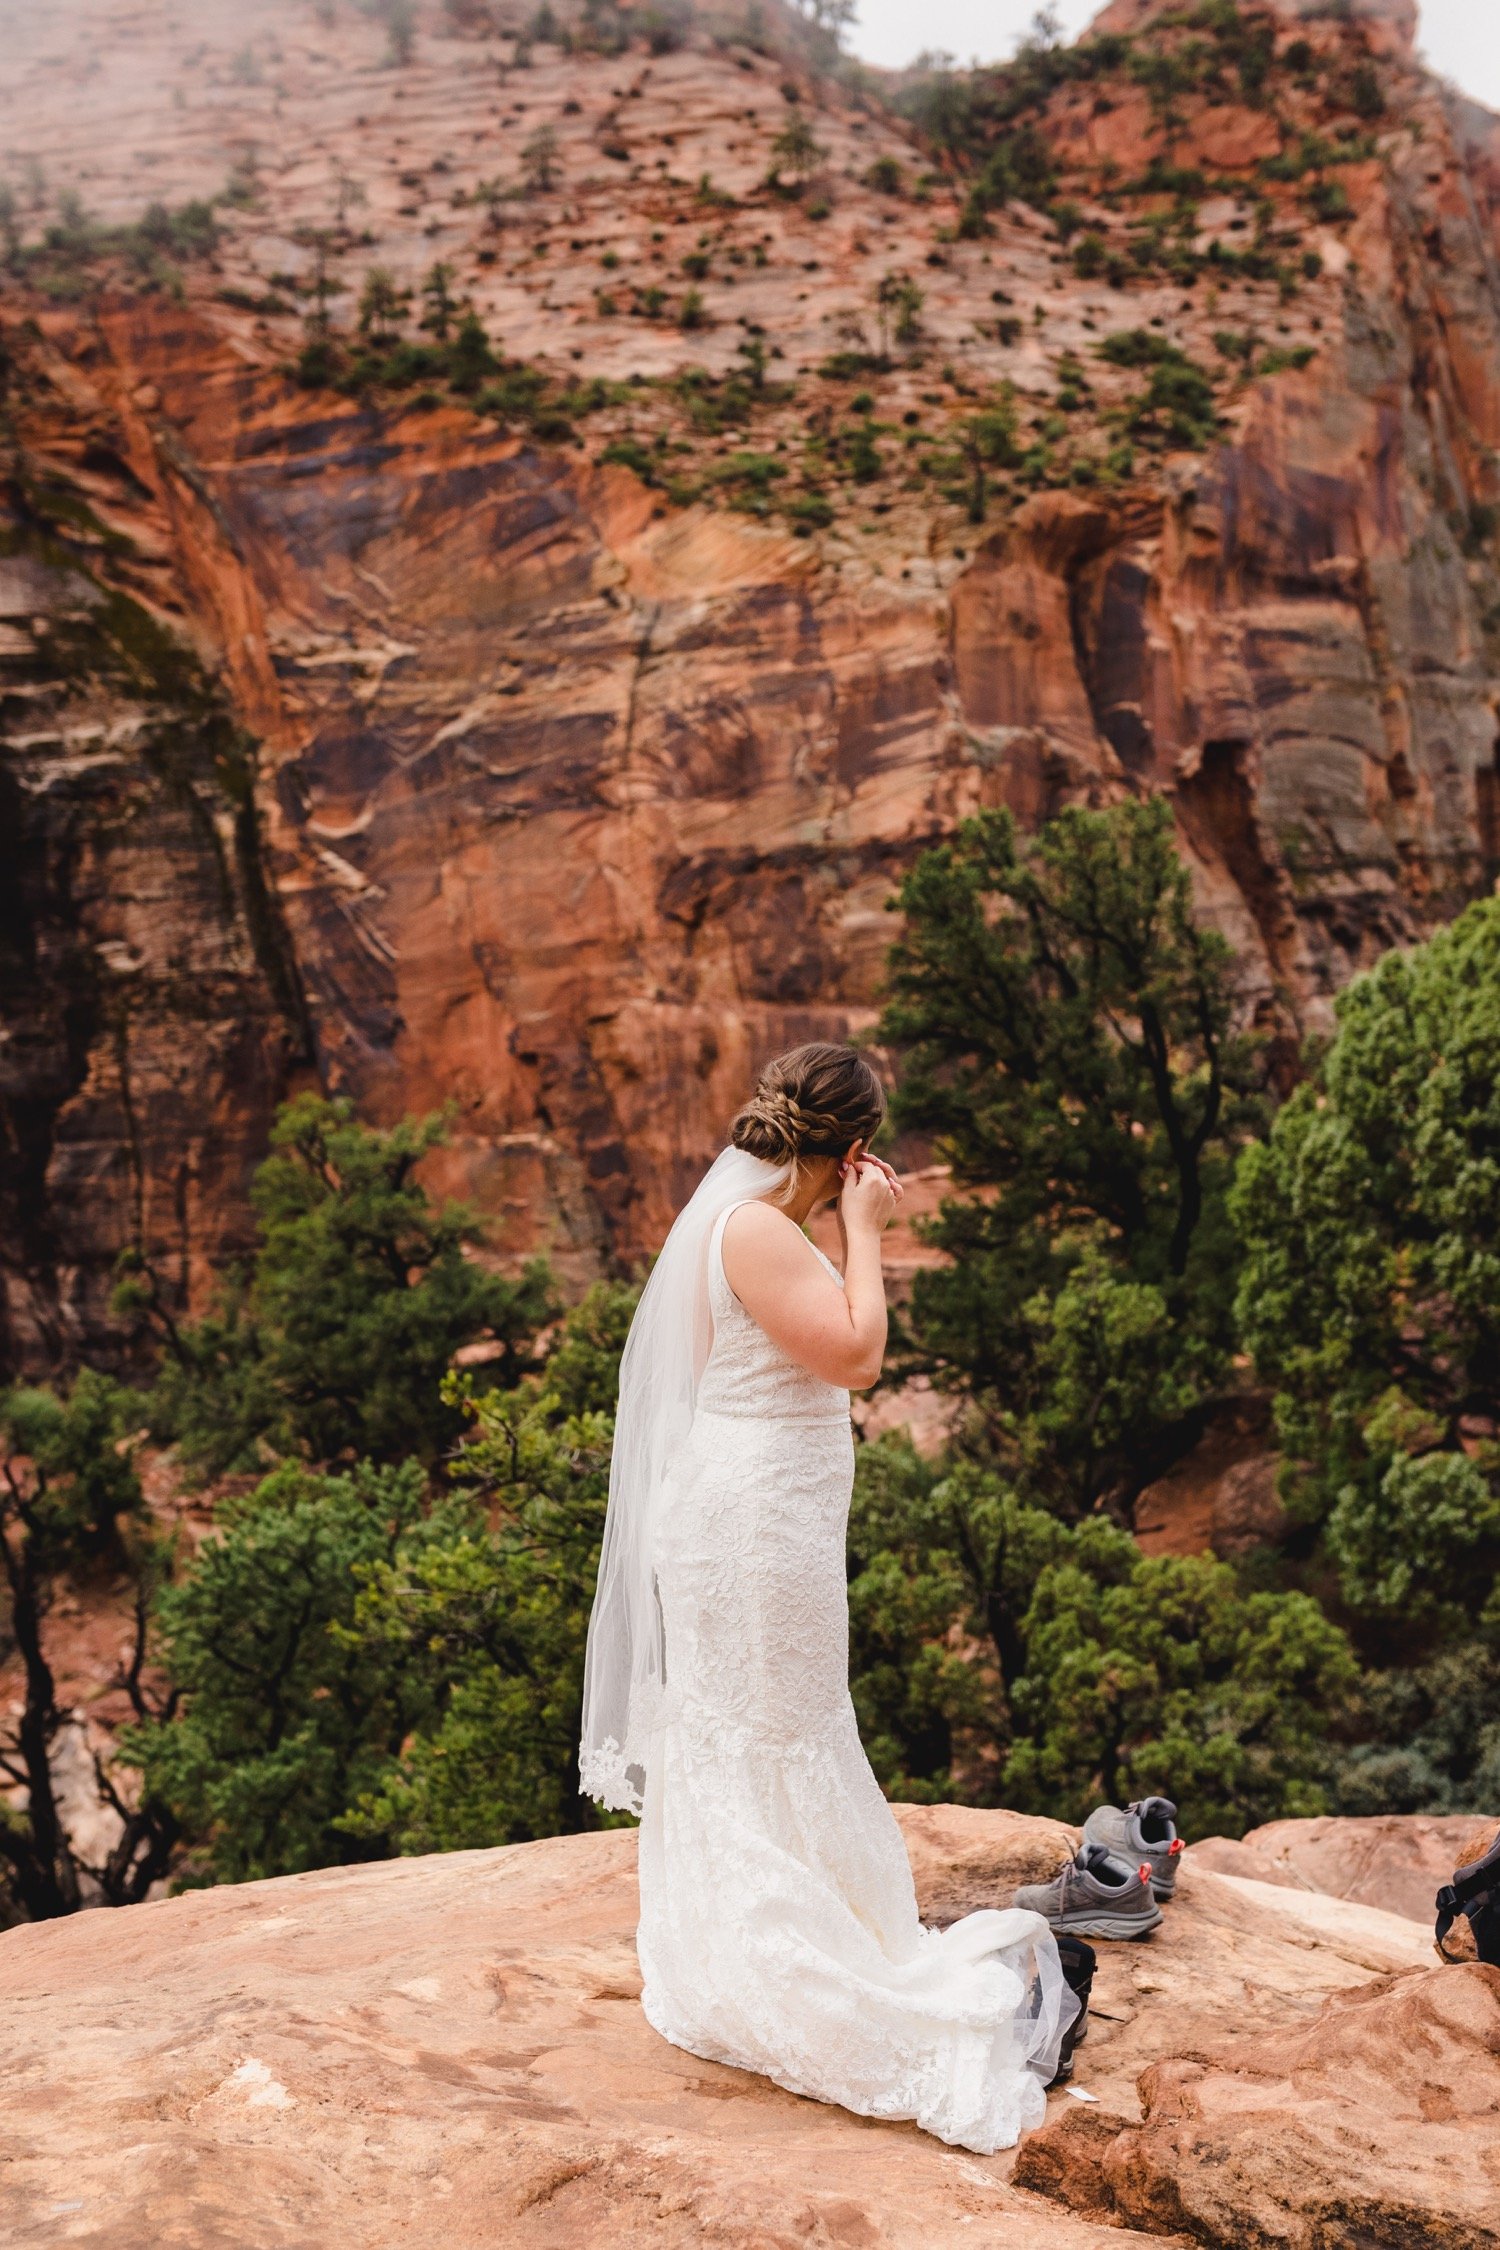 07_Nicole&Terrance-27_Zion-National-Park-Elopement-Utah-The-Everly-Kansas-City-Wedding-Photography.jpg